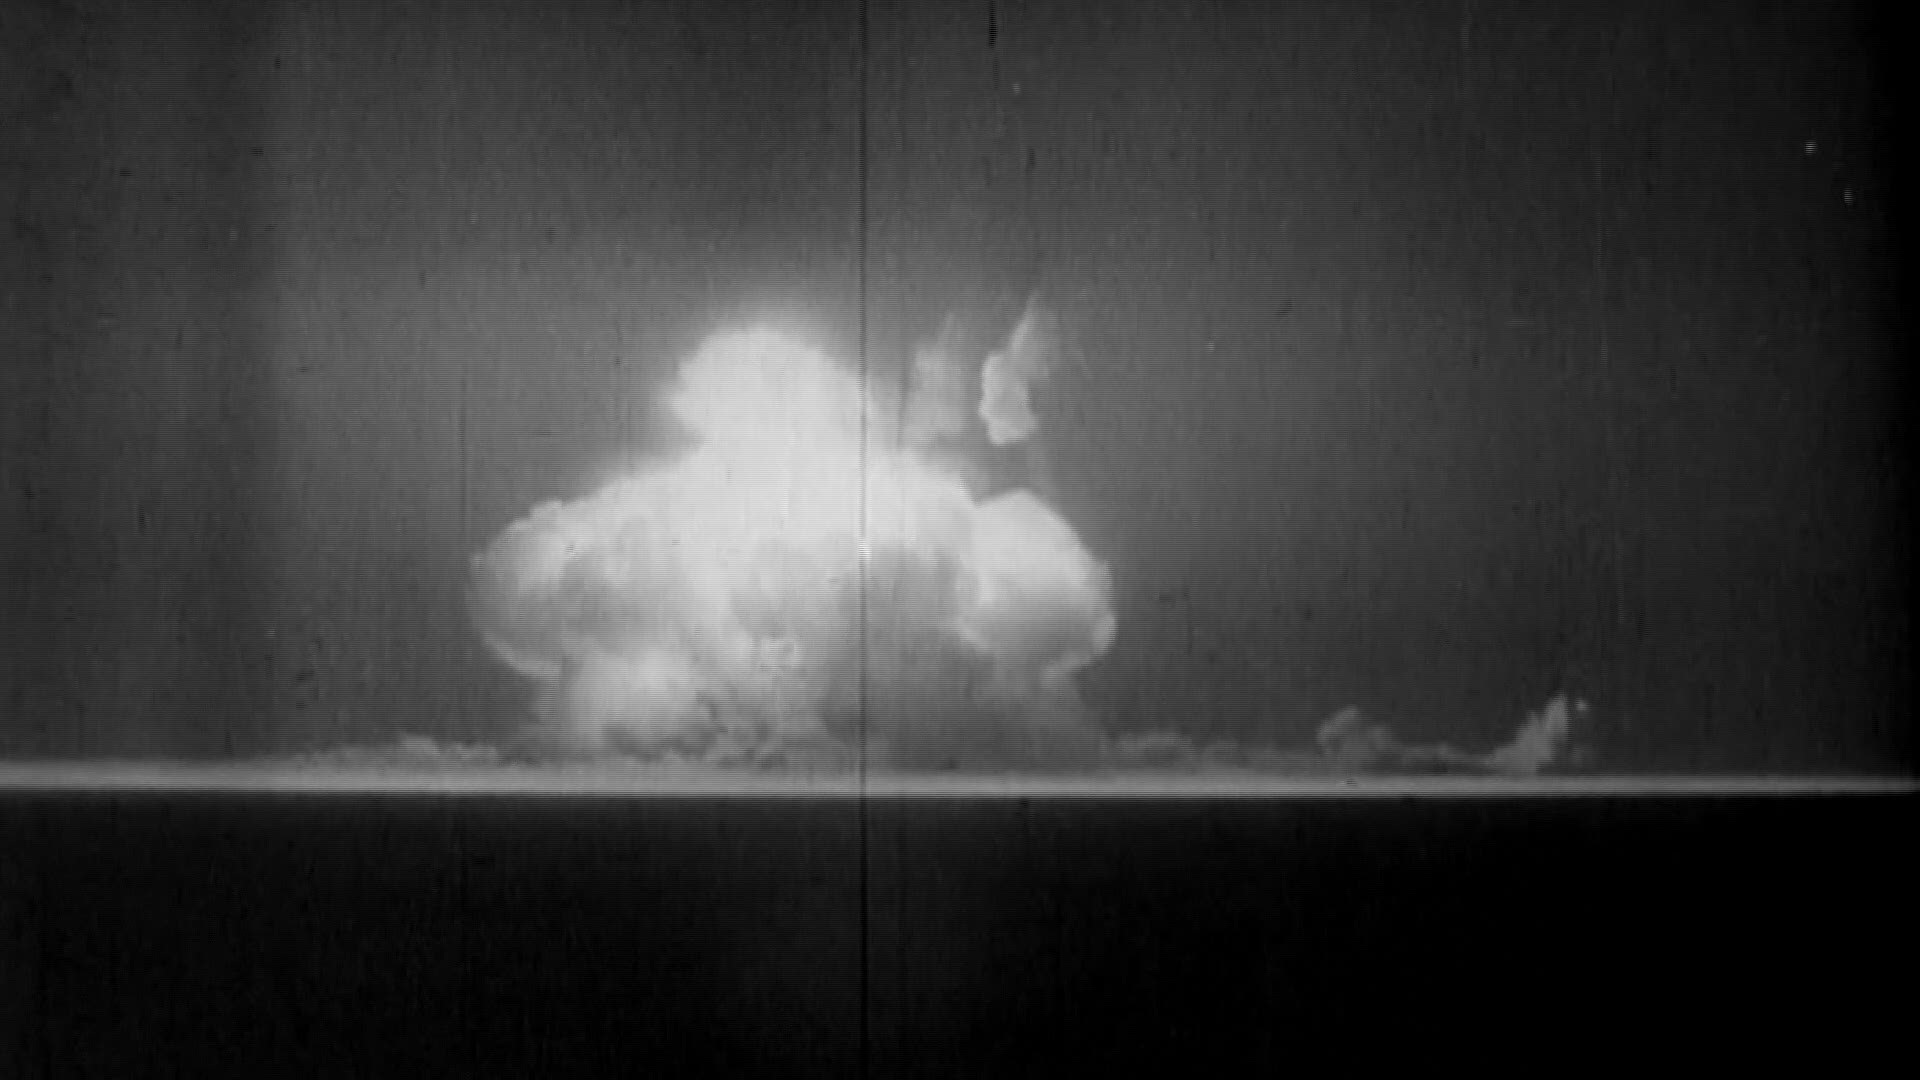 Dick Rosenberg witnessed the testing of 18 atomic bomb explosions.